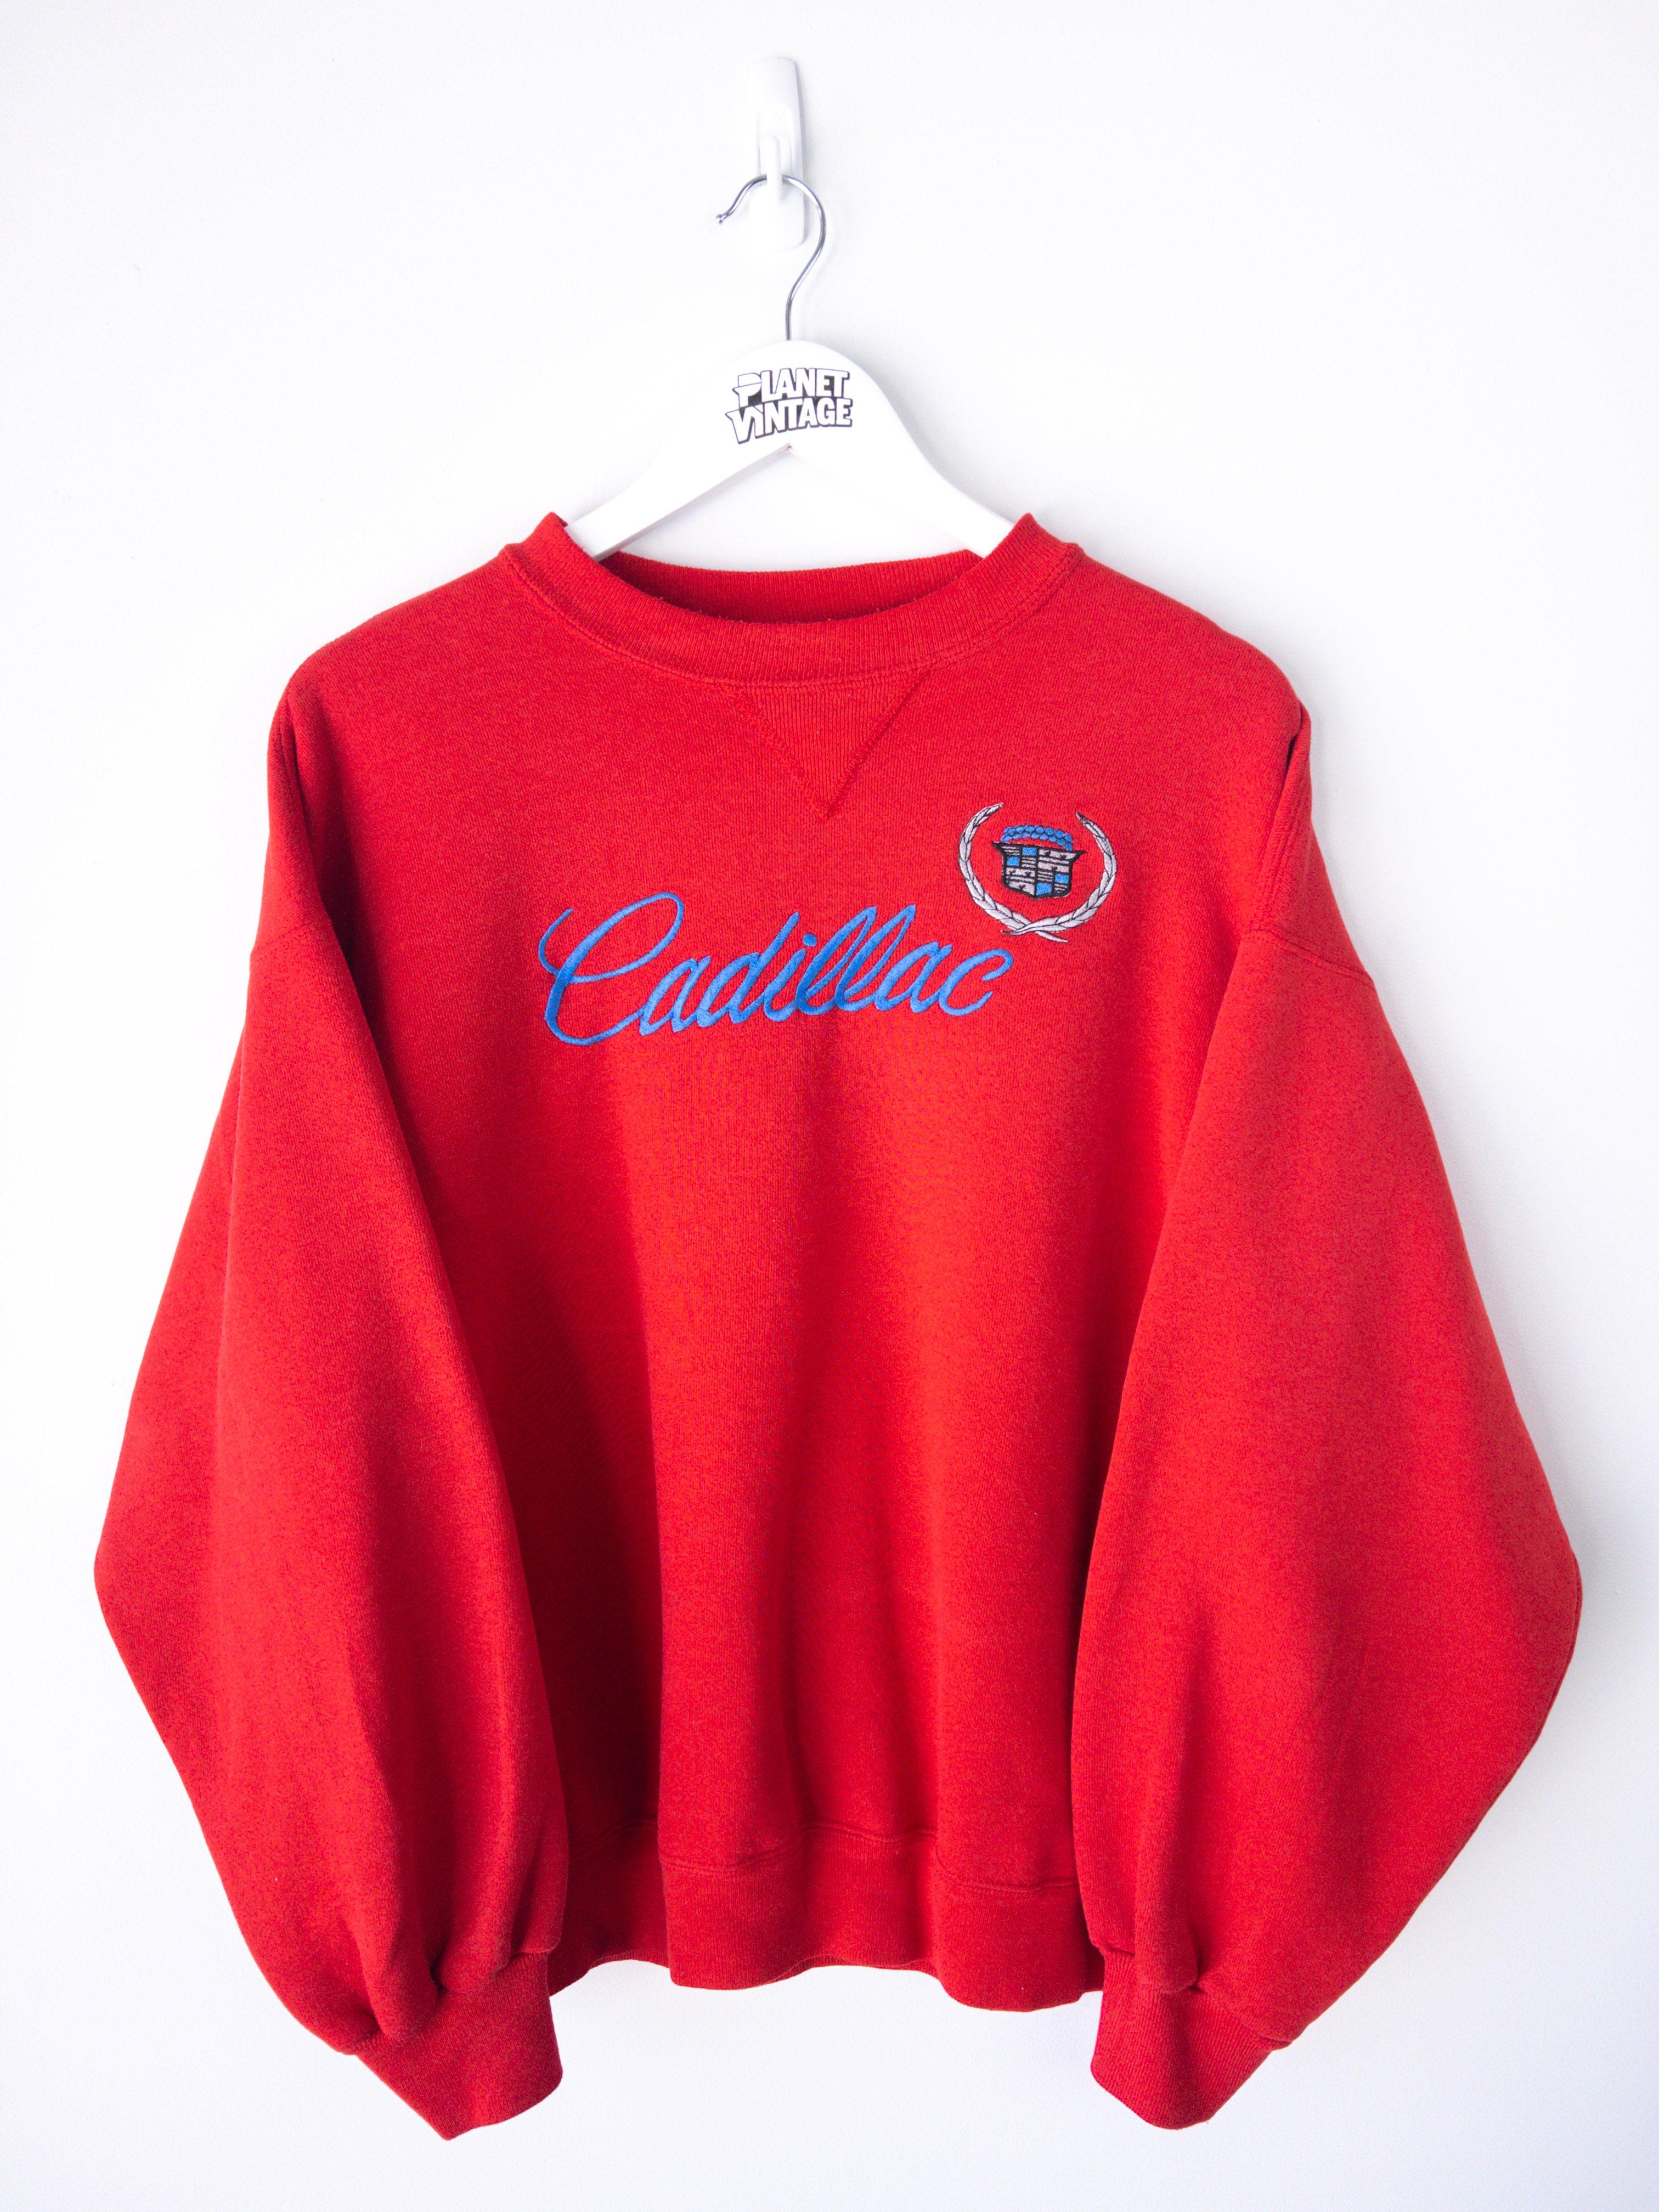 Vintage Cadillac '90s Sweatshirt (L) - Planet Vintage Store